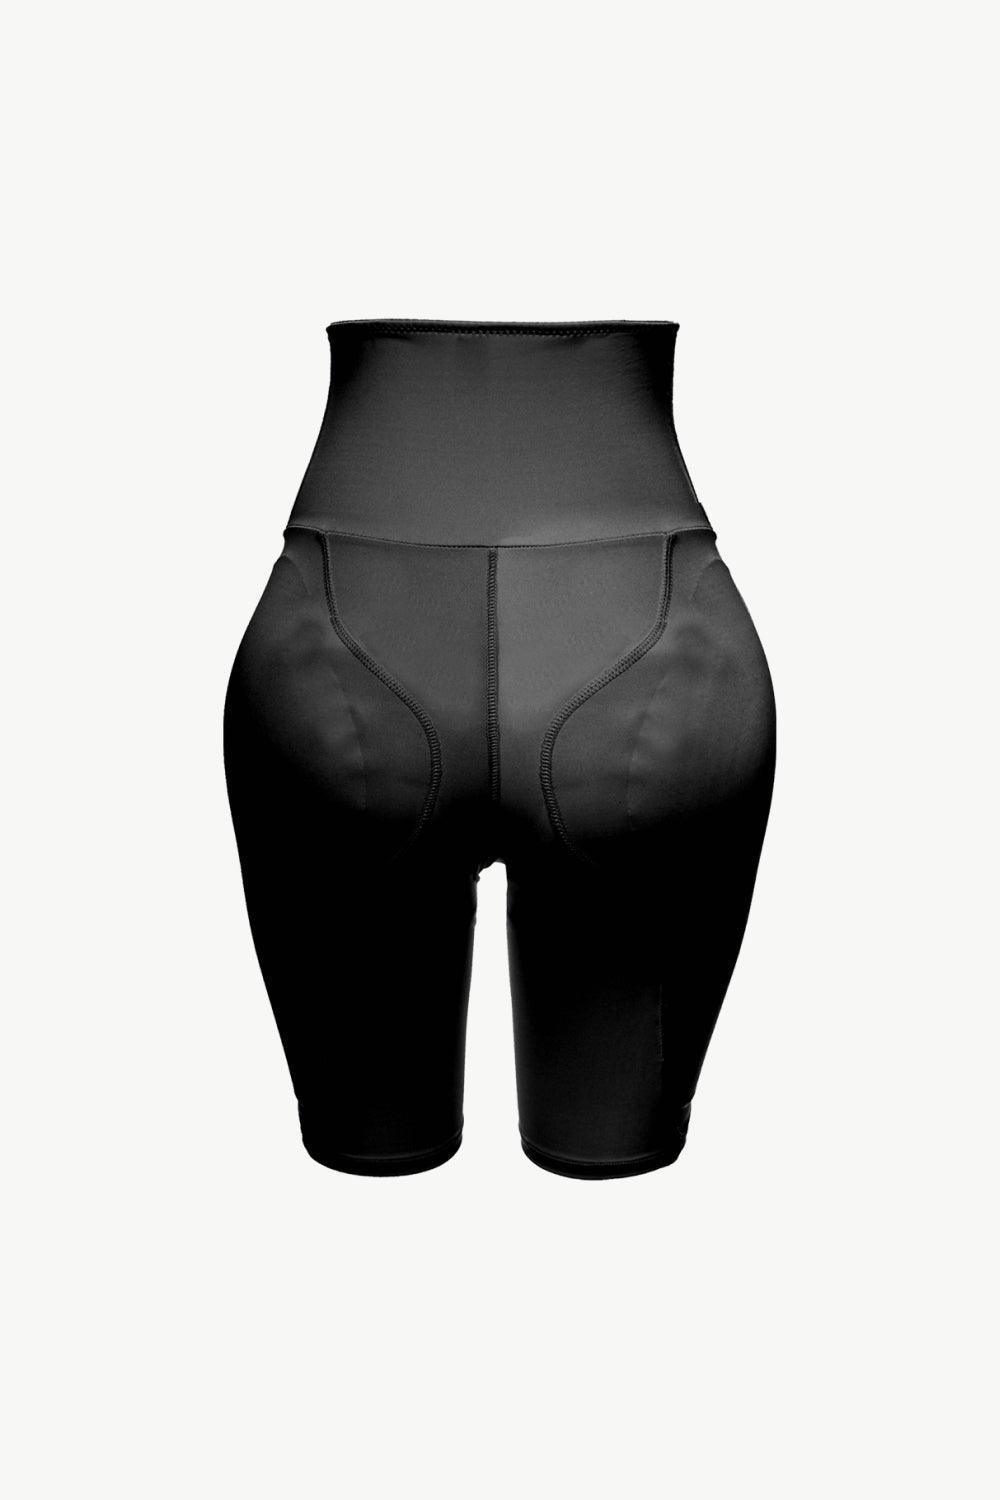 High Waisted Hip Lifting Shaping Shorts - MXSTUDIO.COM